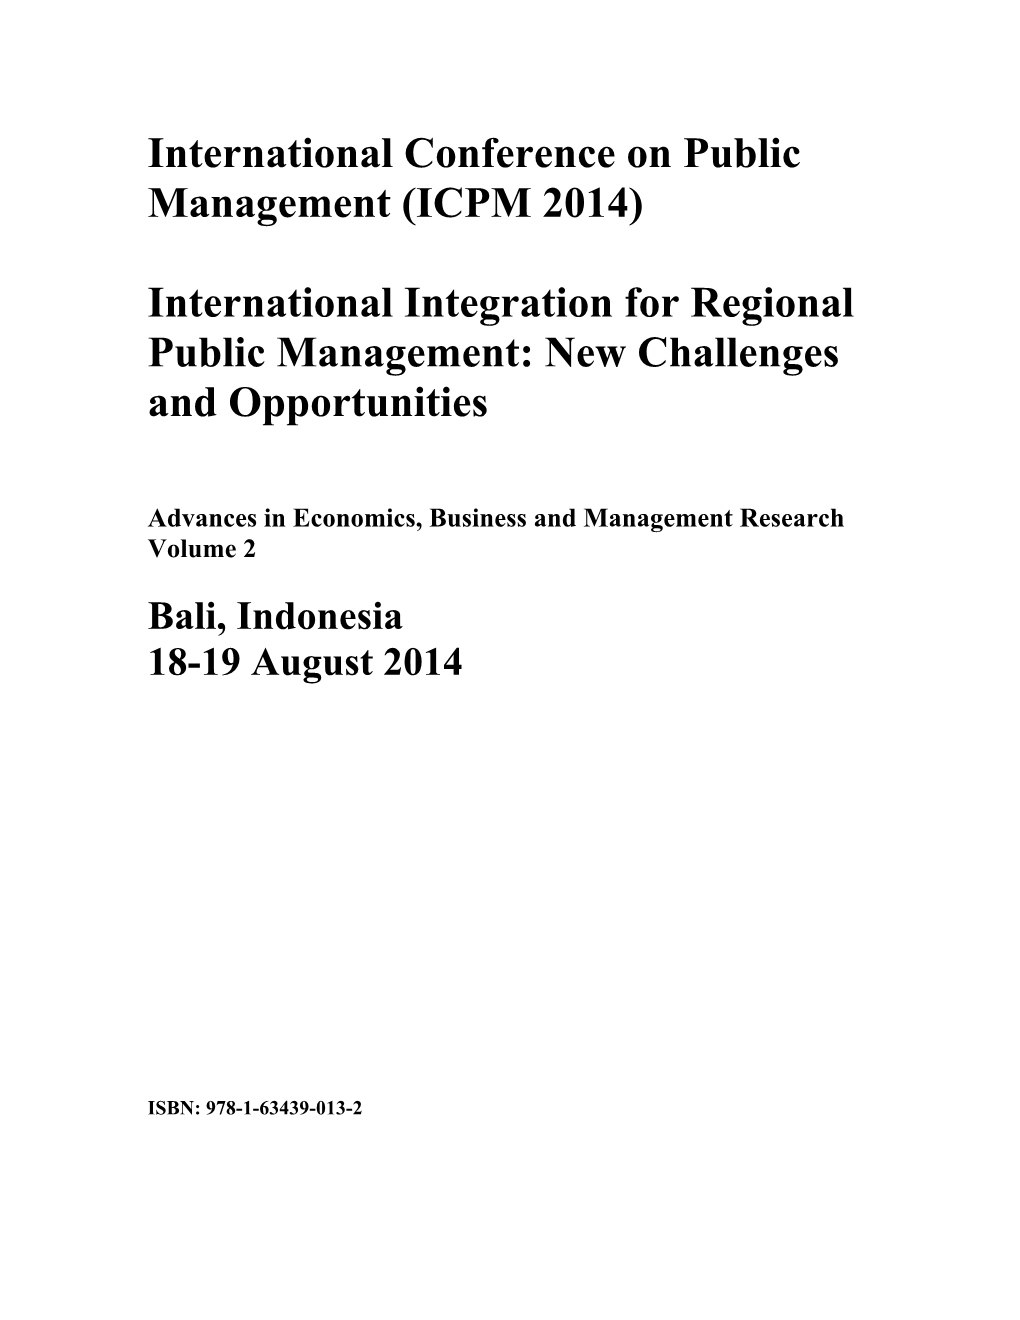 (ICPM 2014) International Integration for Regional Public Management